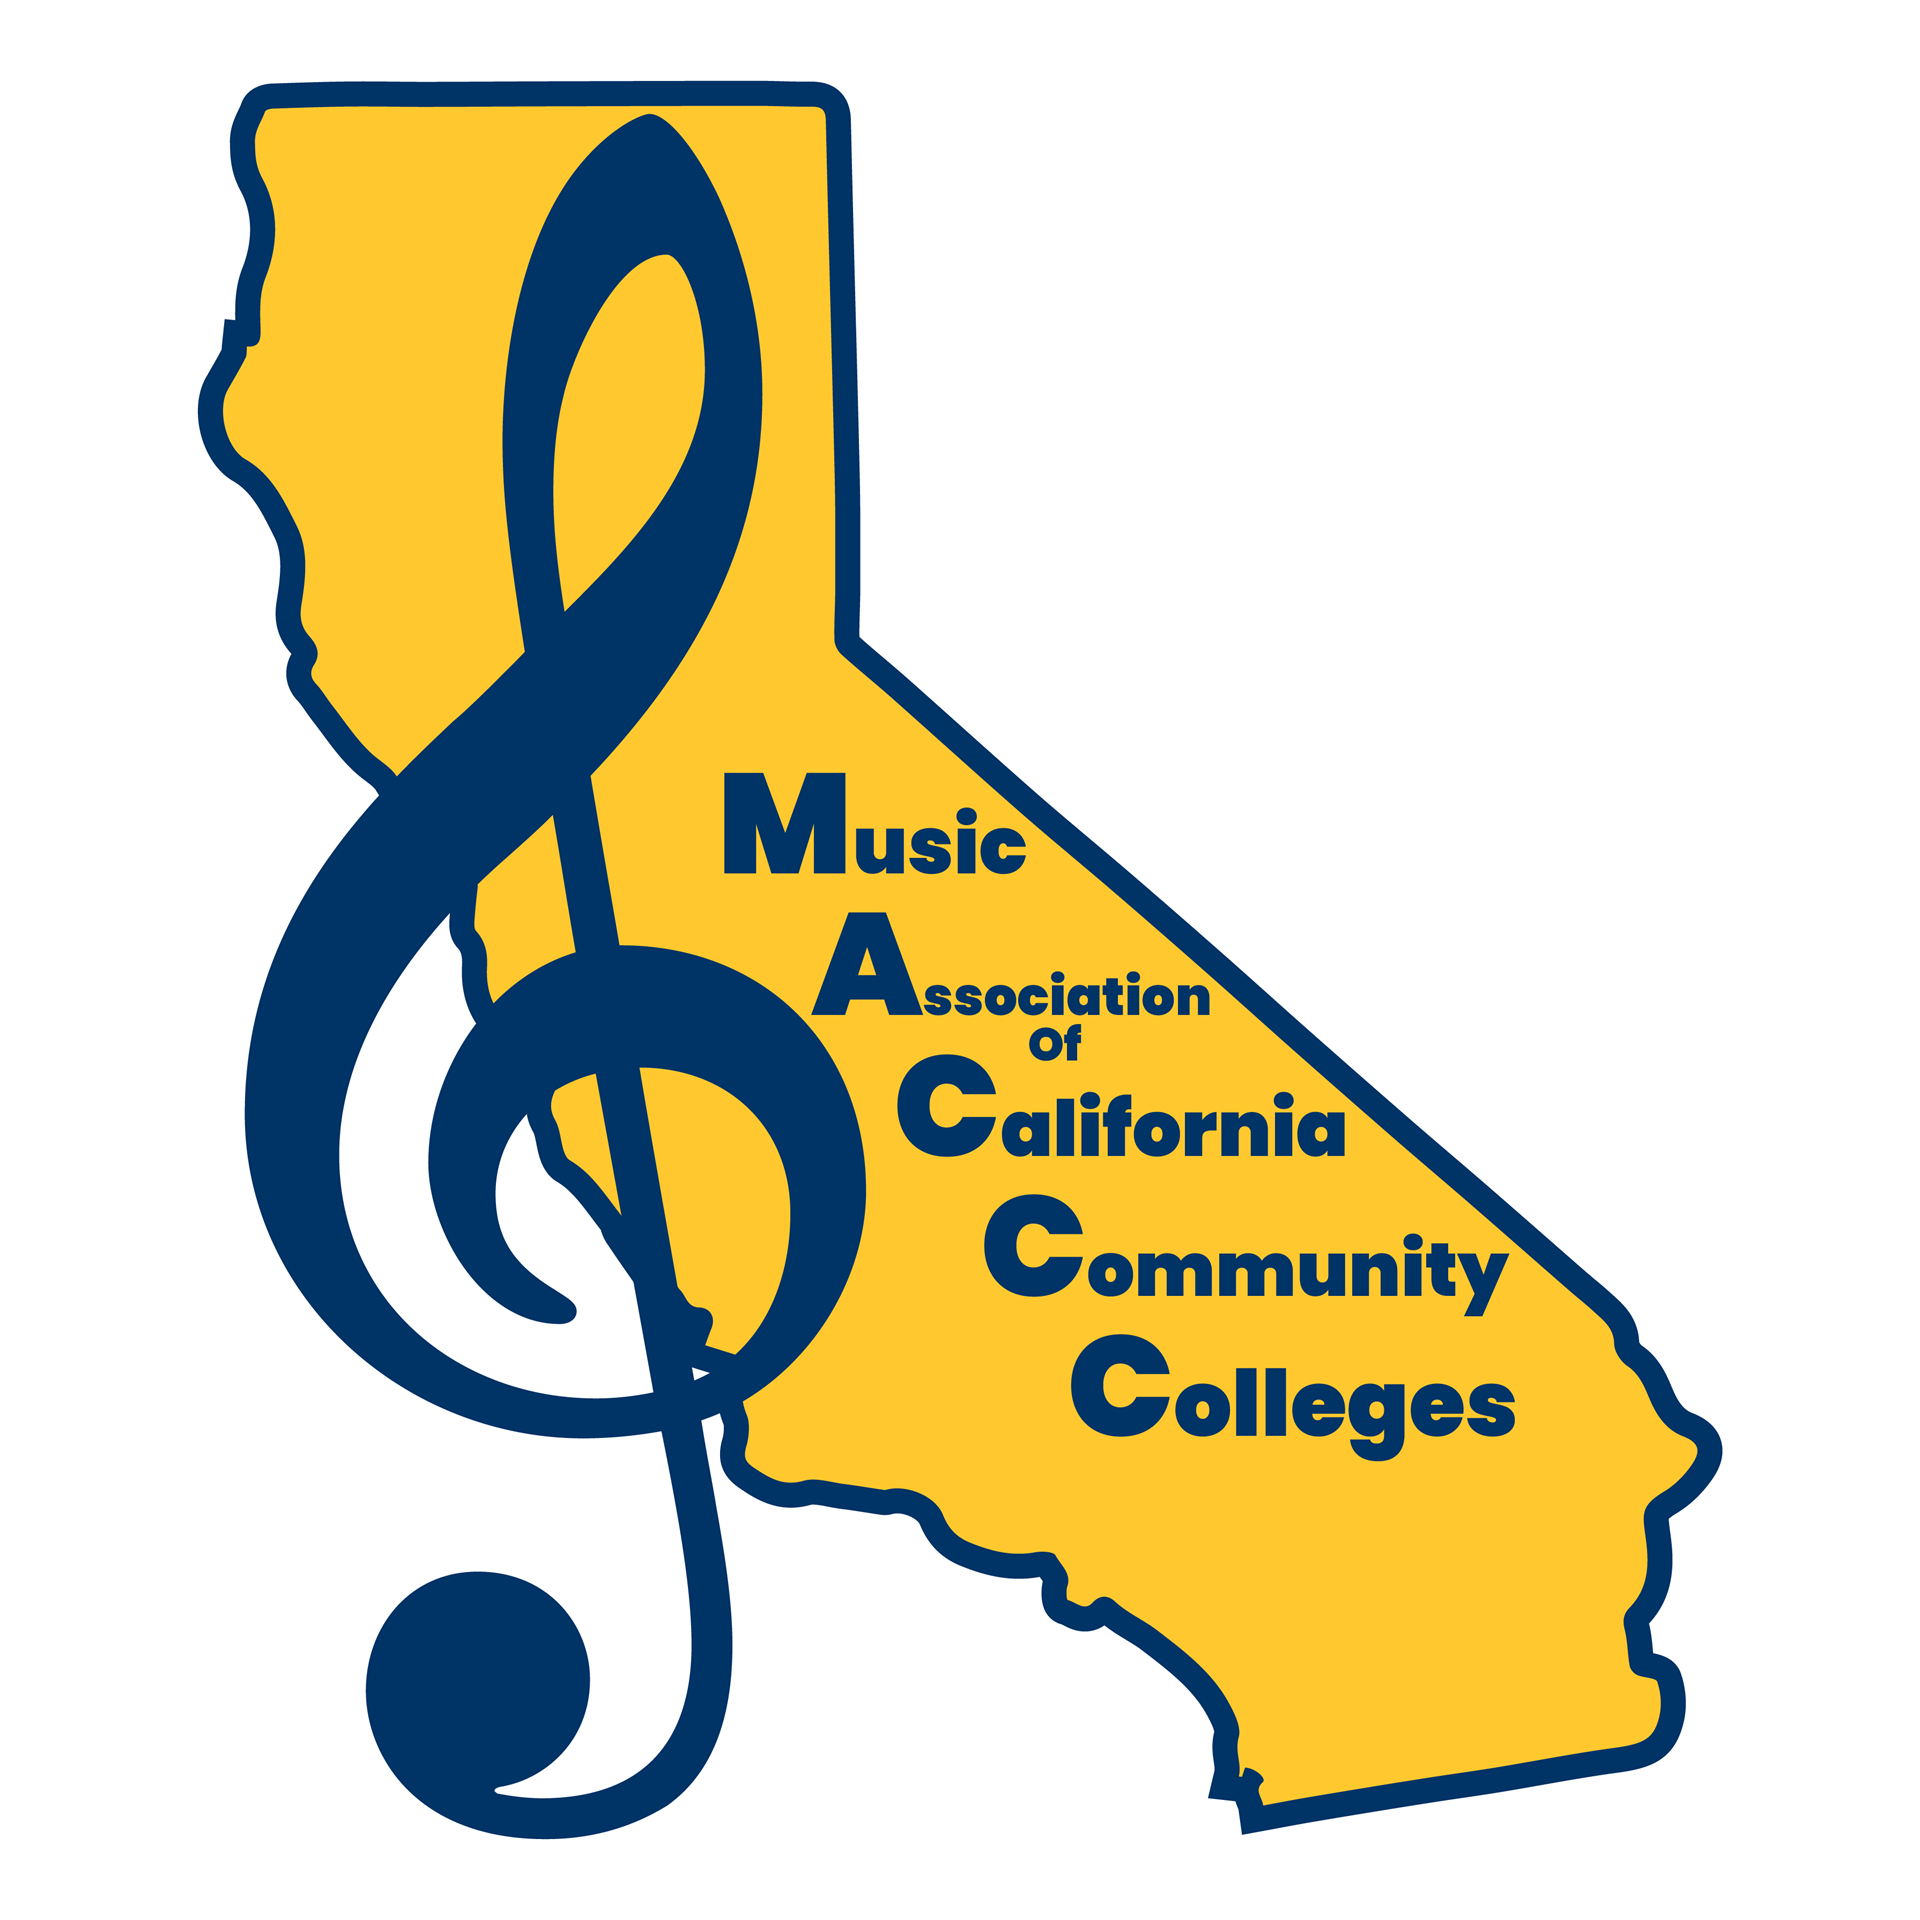 Music Association of California Community Colleges